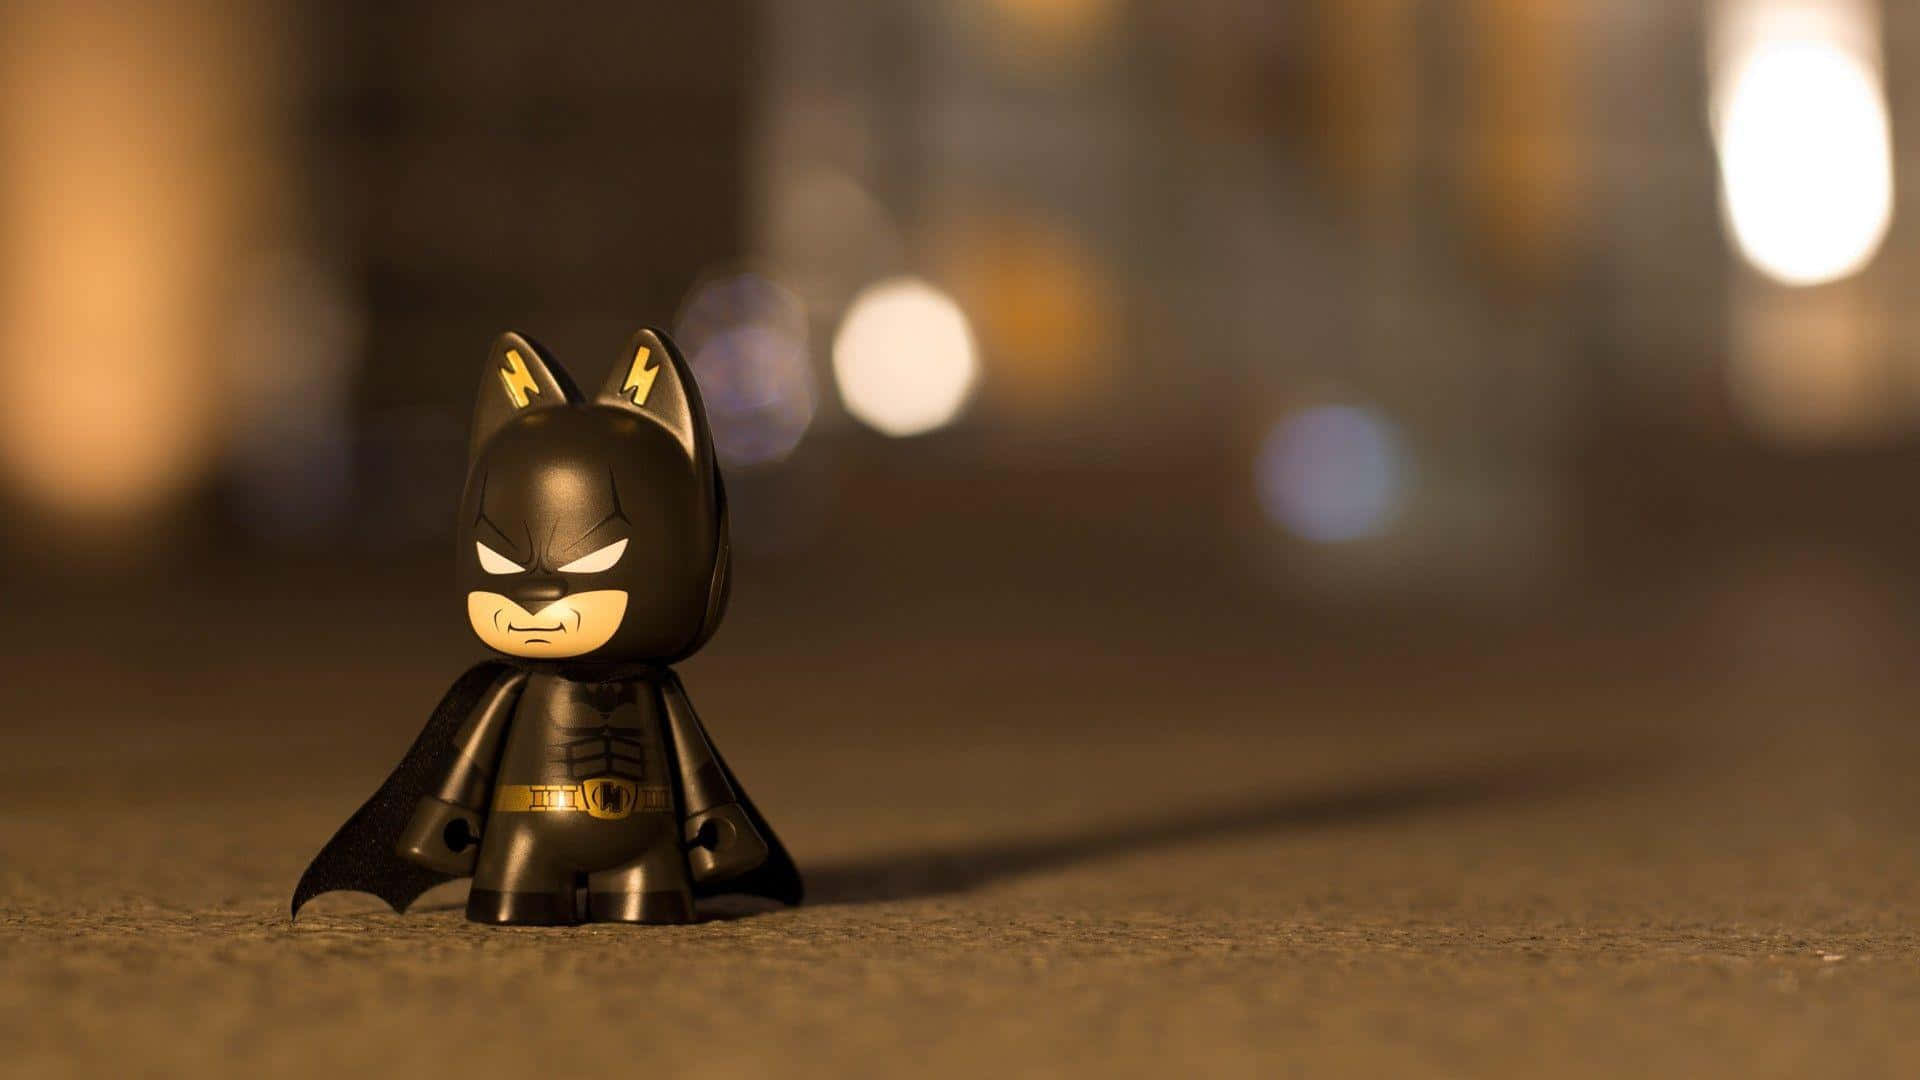 Batman Toy Figure Nighttime Bokeh Wallpaper